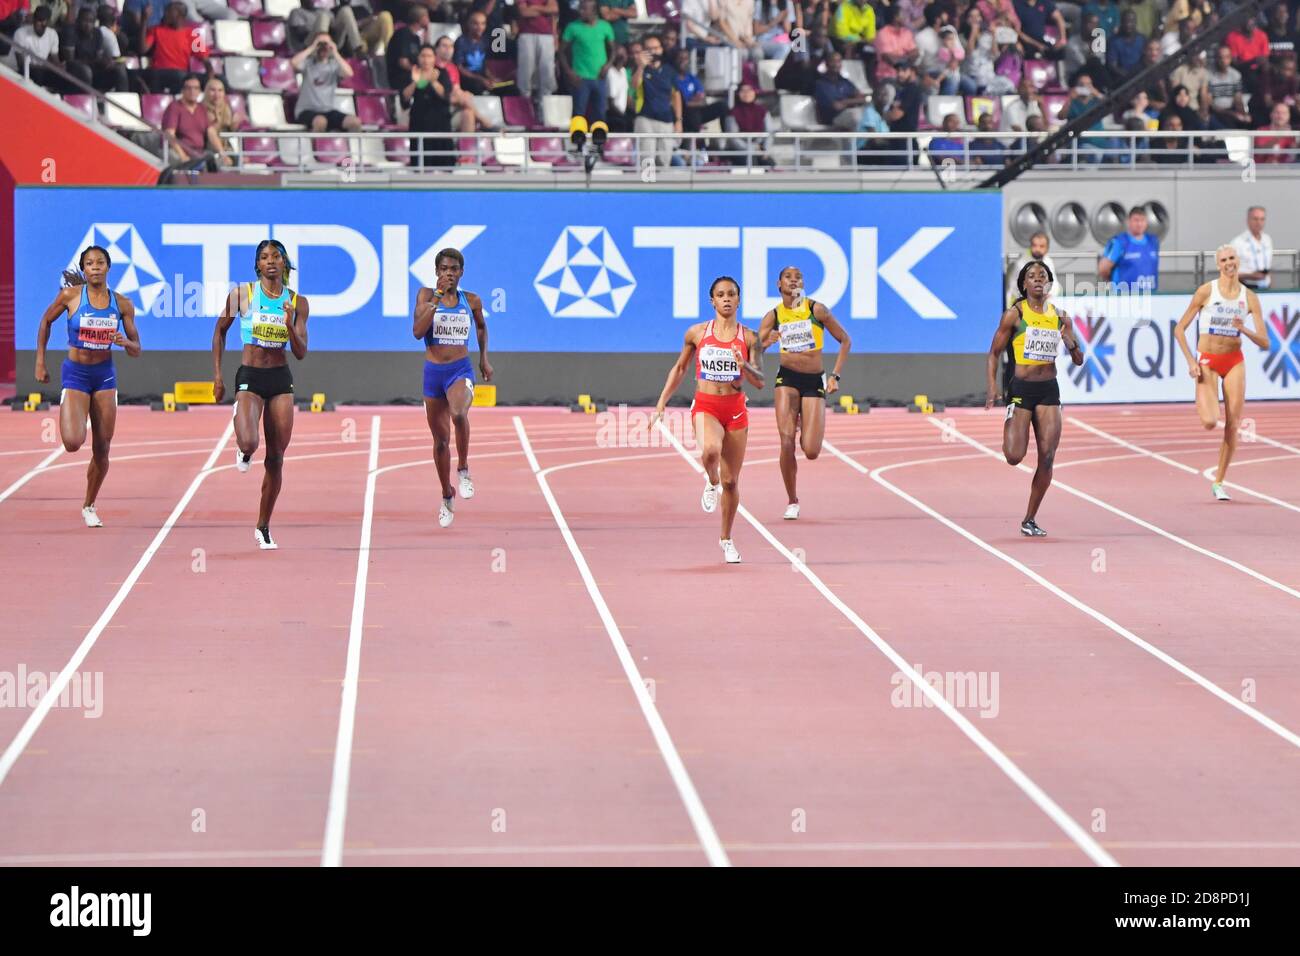 Salwa Eid Naser (or), Shaunae Miller-Uibo (argent), Shericka Jackson (bronze). 400 mètres femmes. Championnats du monde d'athlétisme de l'IAAF, Doha 2019 Banque D'Images